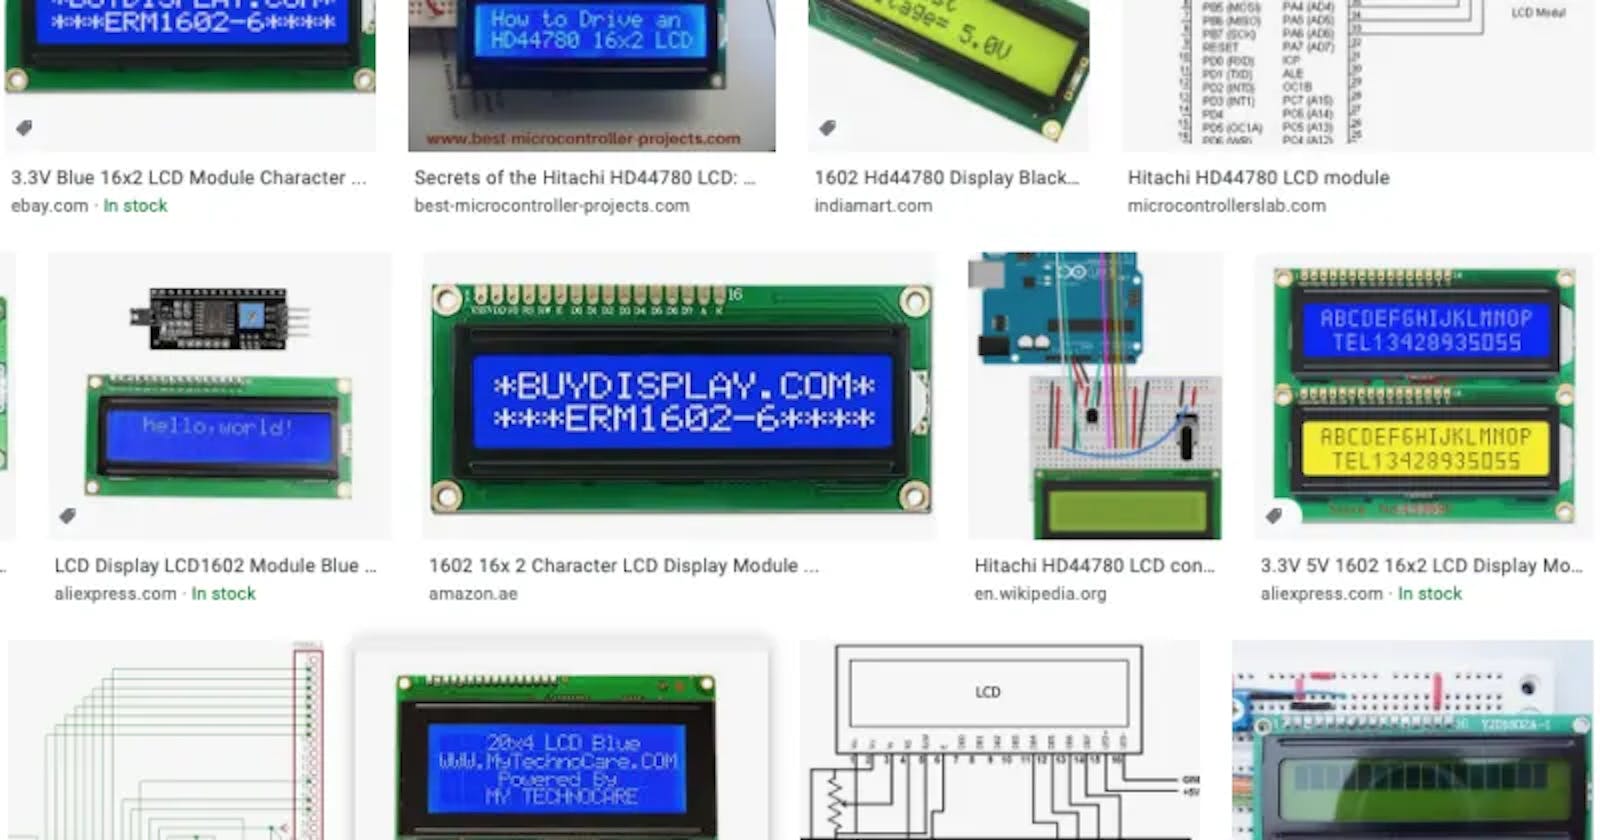 HD44780 LCD, I/O expanders, I2C interface etc